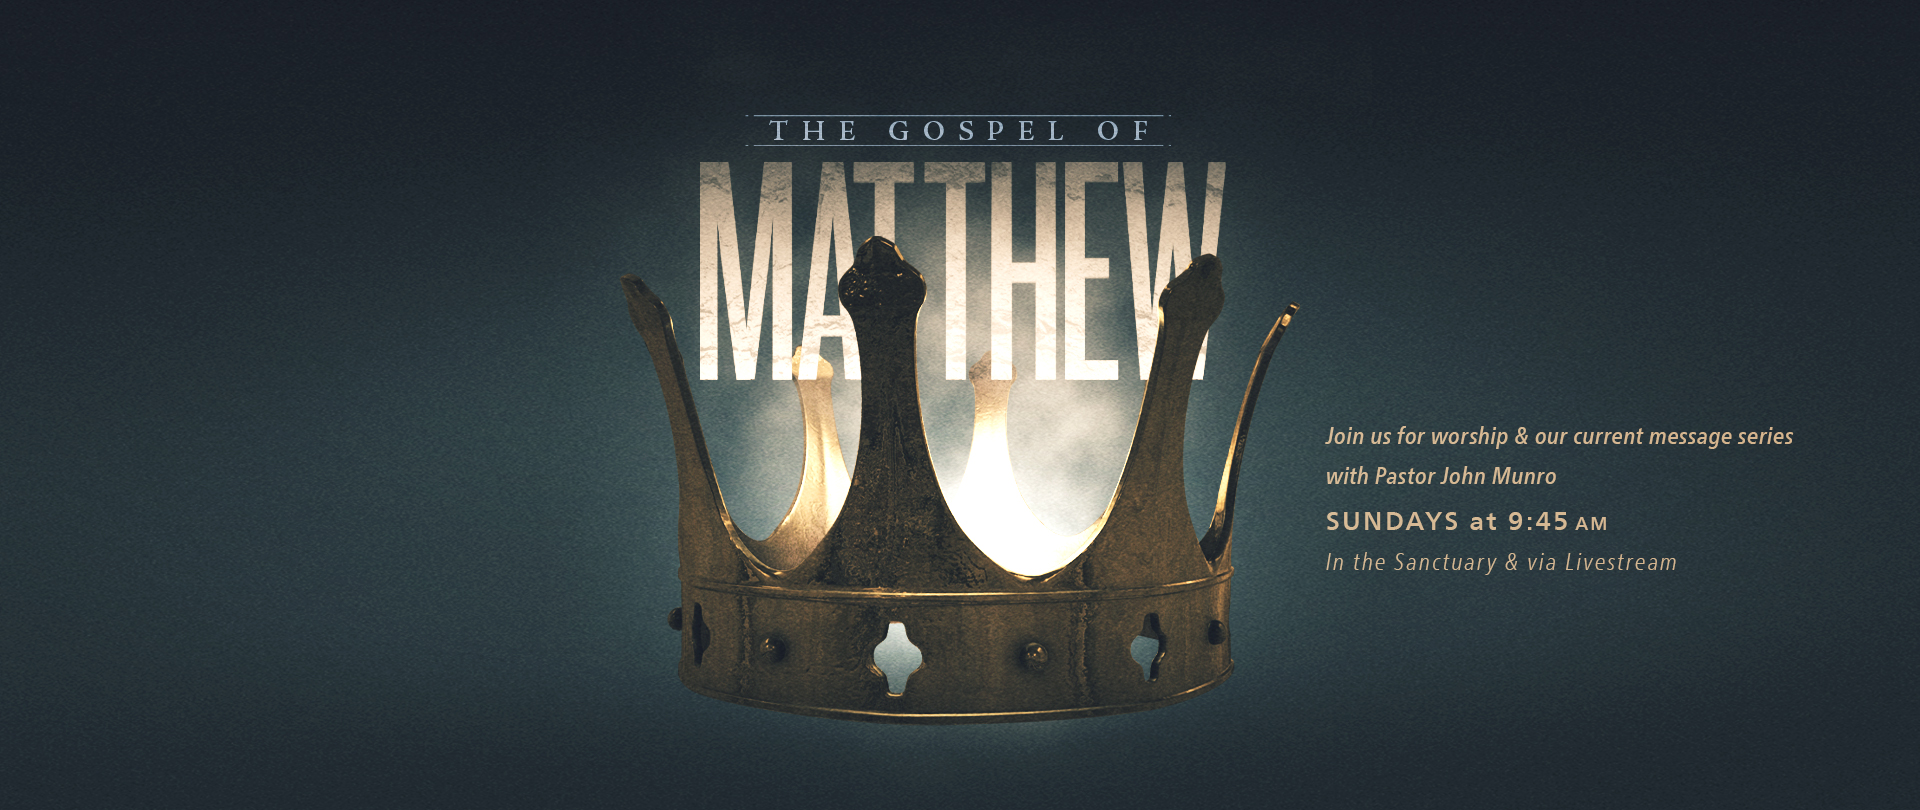 The Gospel of Matthew
Sundays at 9:45 AM
